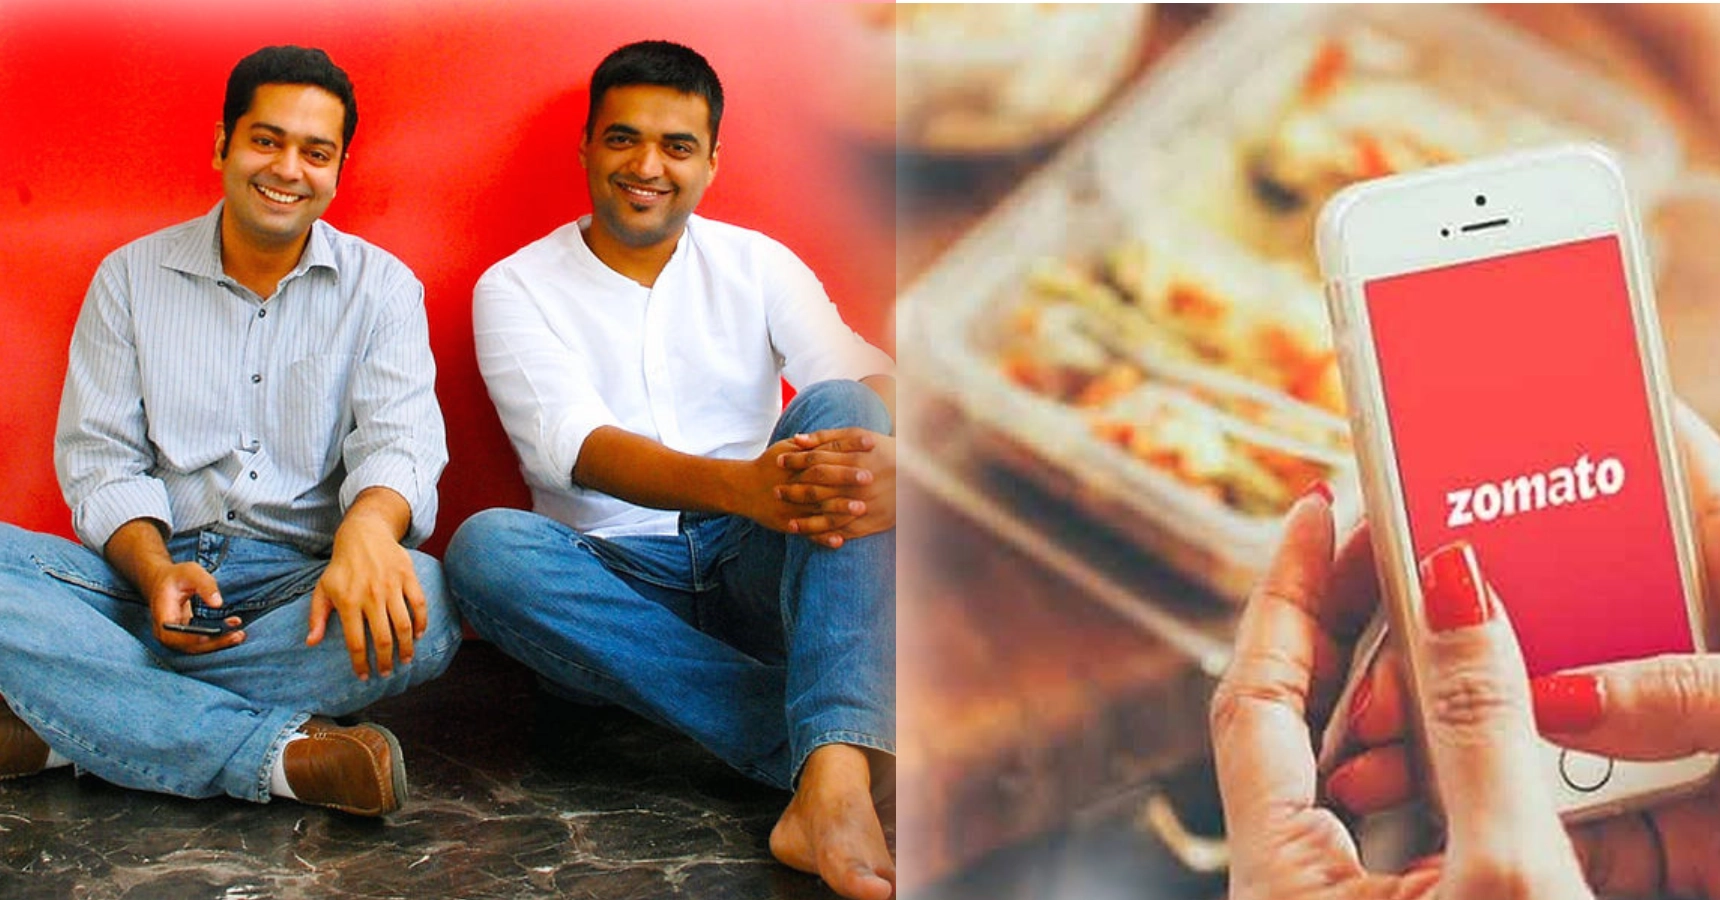 Success story of Zomato's owners Dipinder Goyel and pankaj chadda